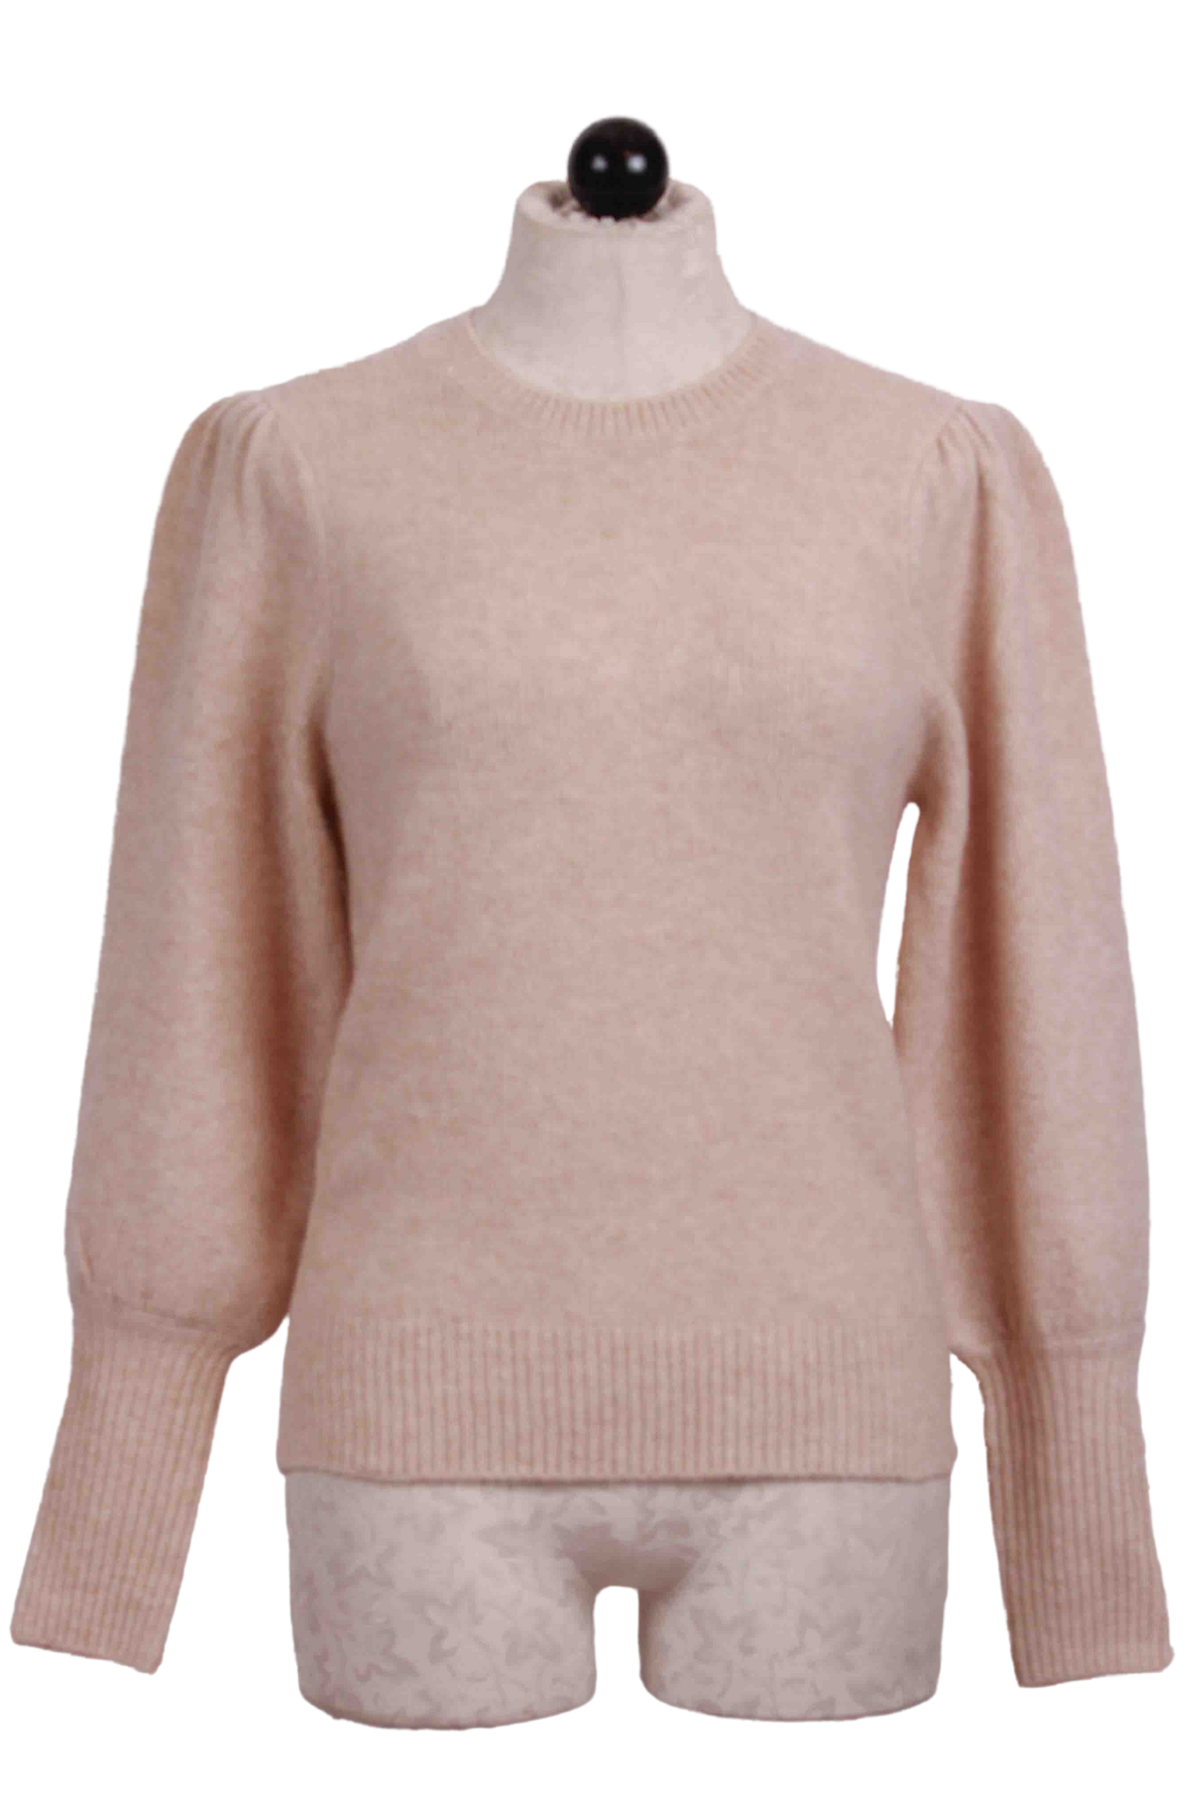 Oat Colored Shirred Sleeve Sweater by Fifteen Twenty